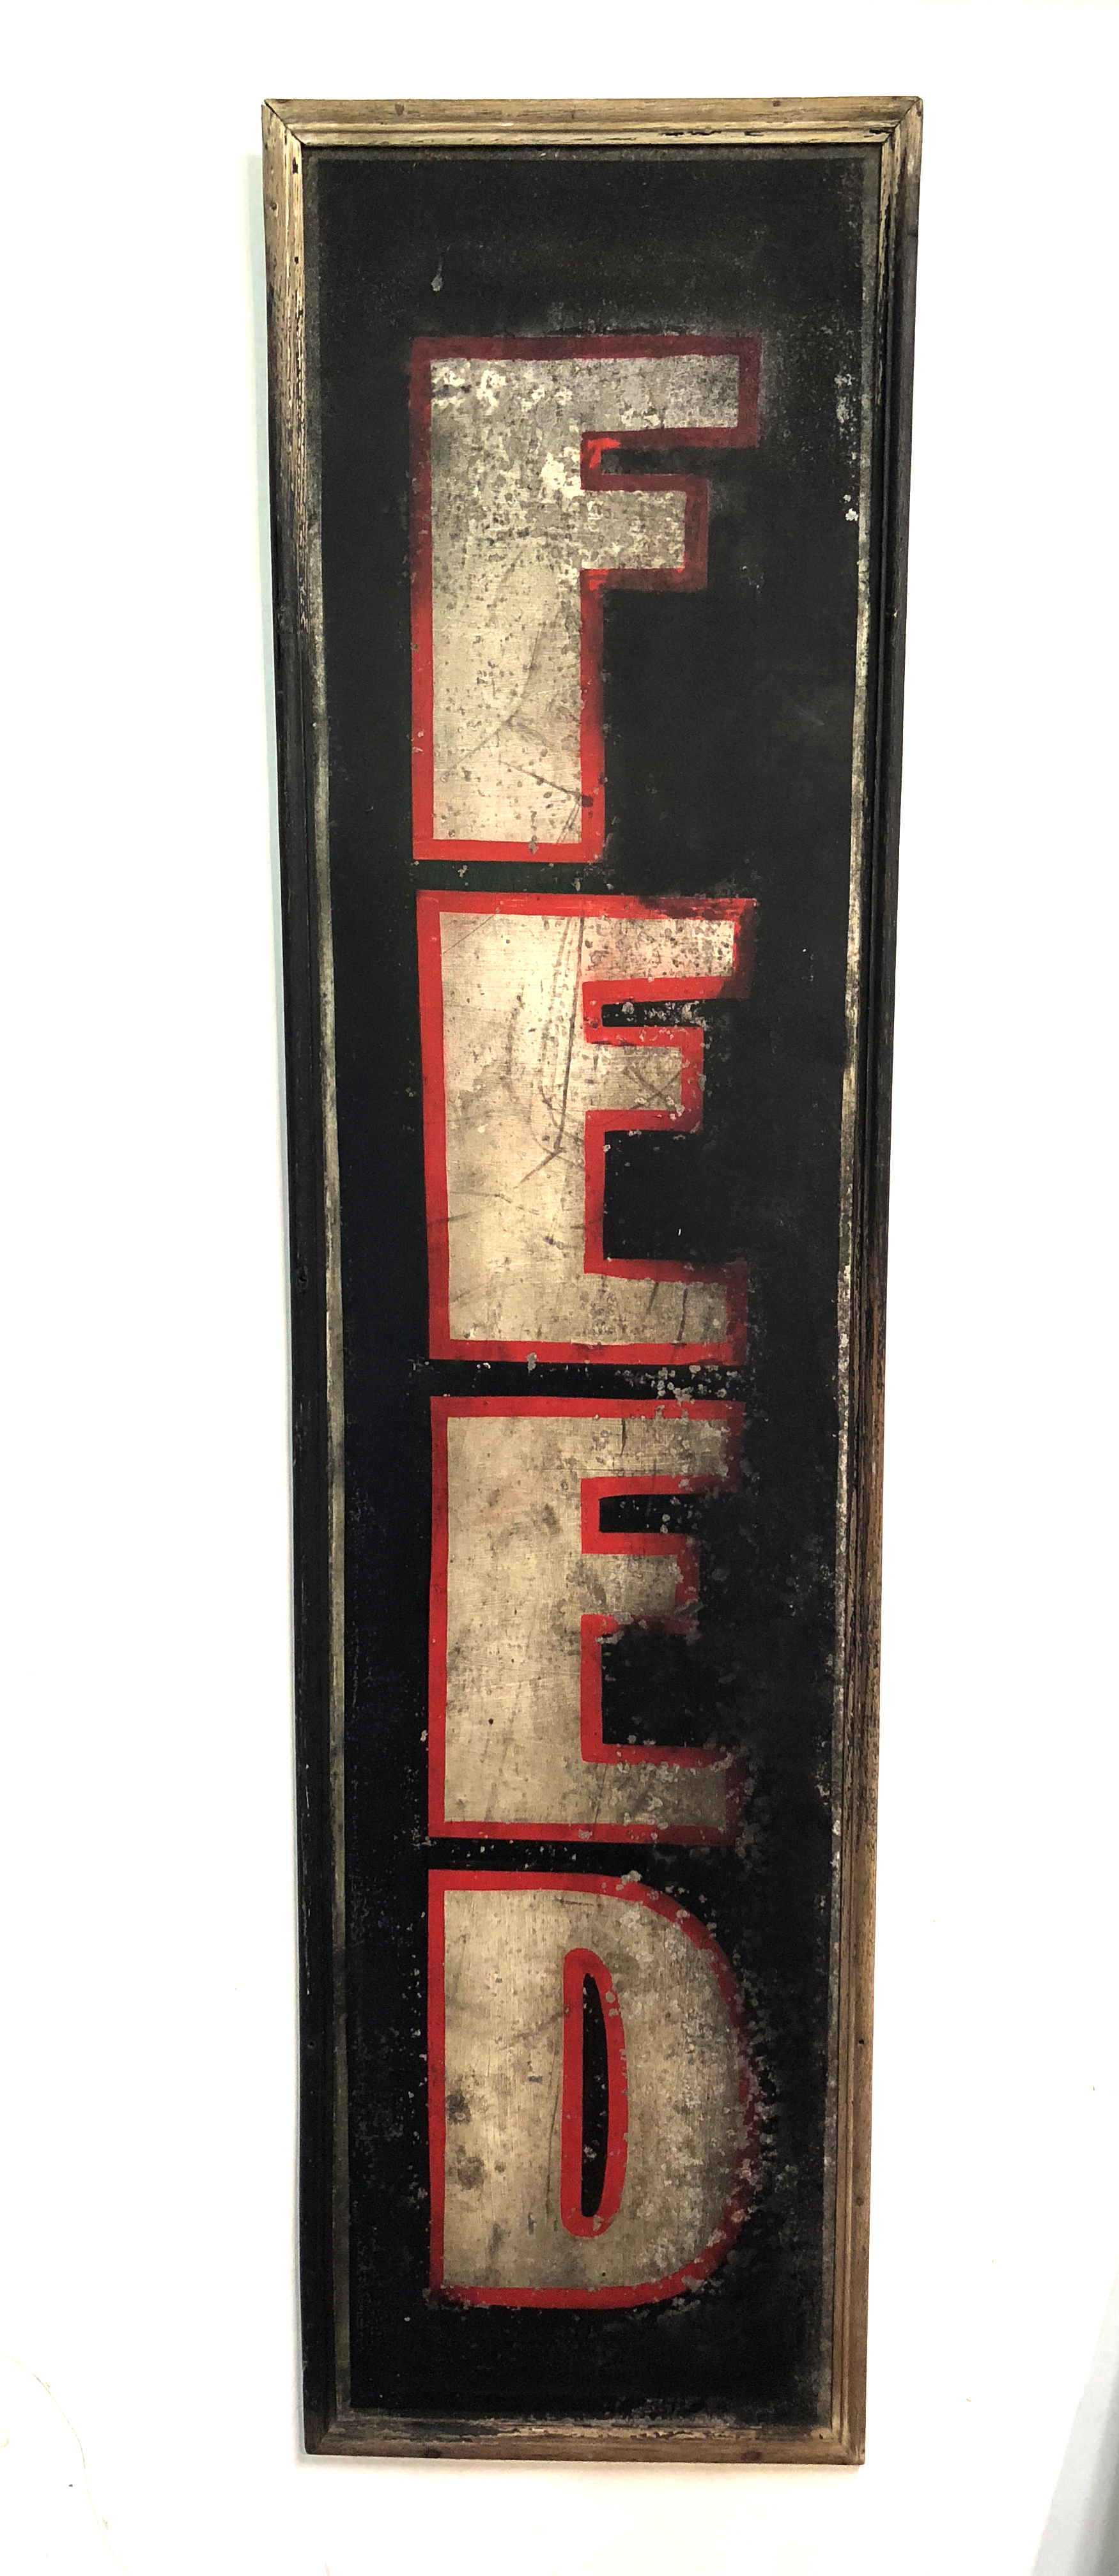   Tin with wooden frame, 60.5" h x 15.25" w, Ashland, Ohio, early 20th century.  